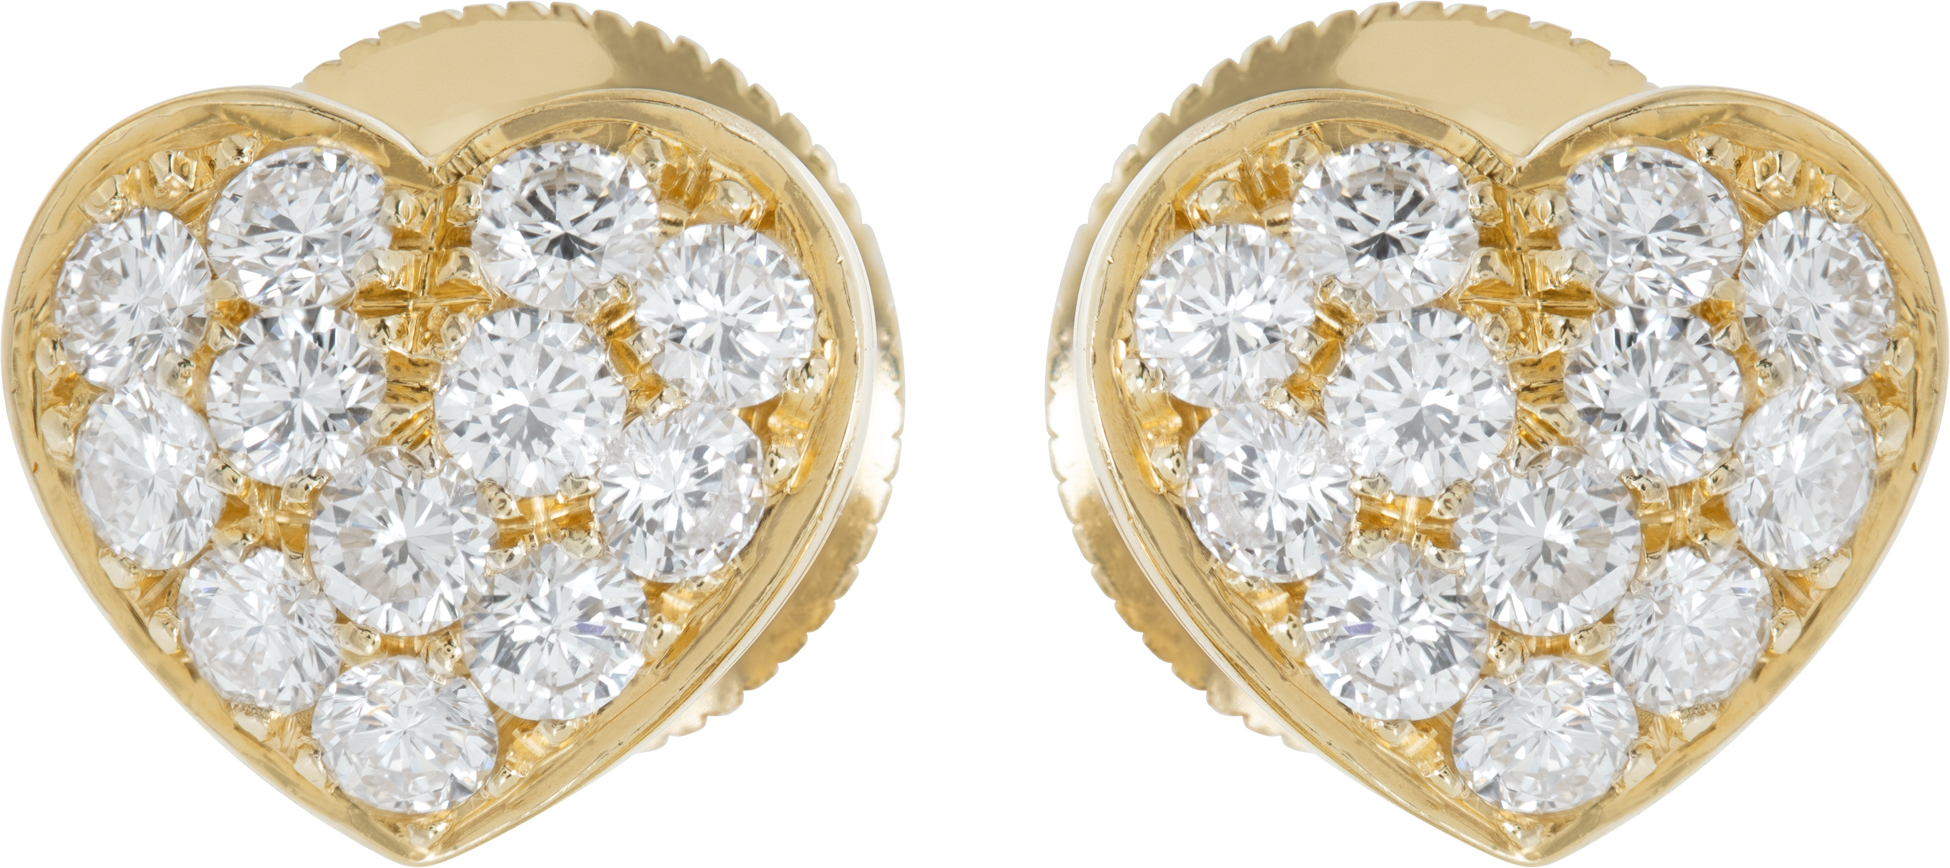  Bvlgari diamond pave heart earrings in 18k